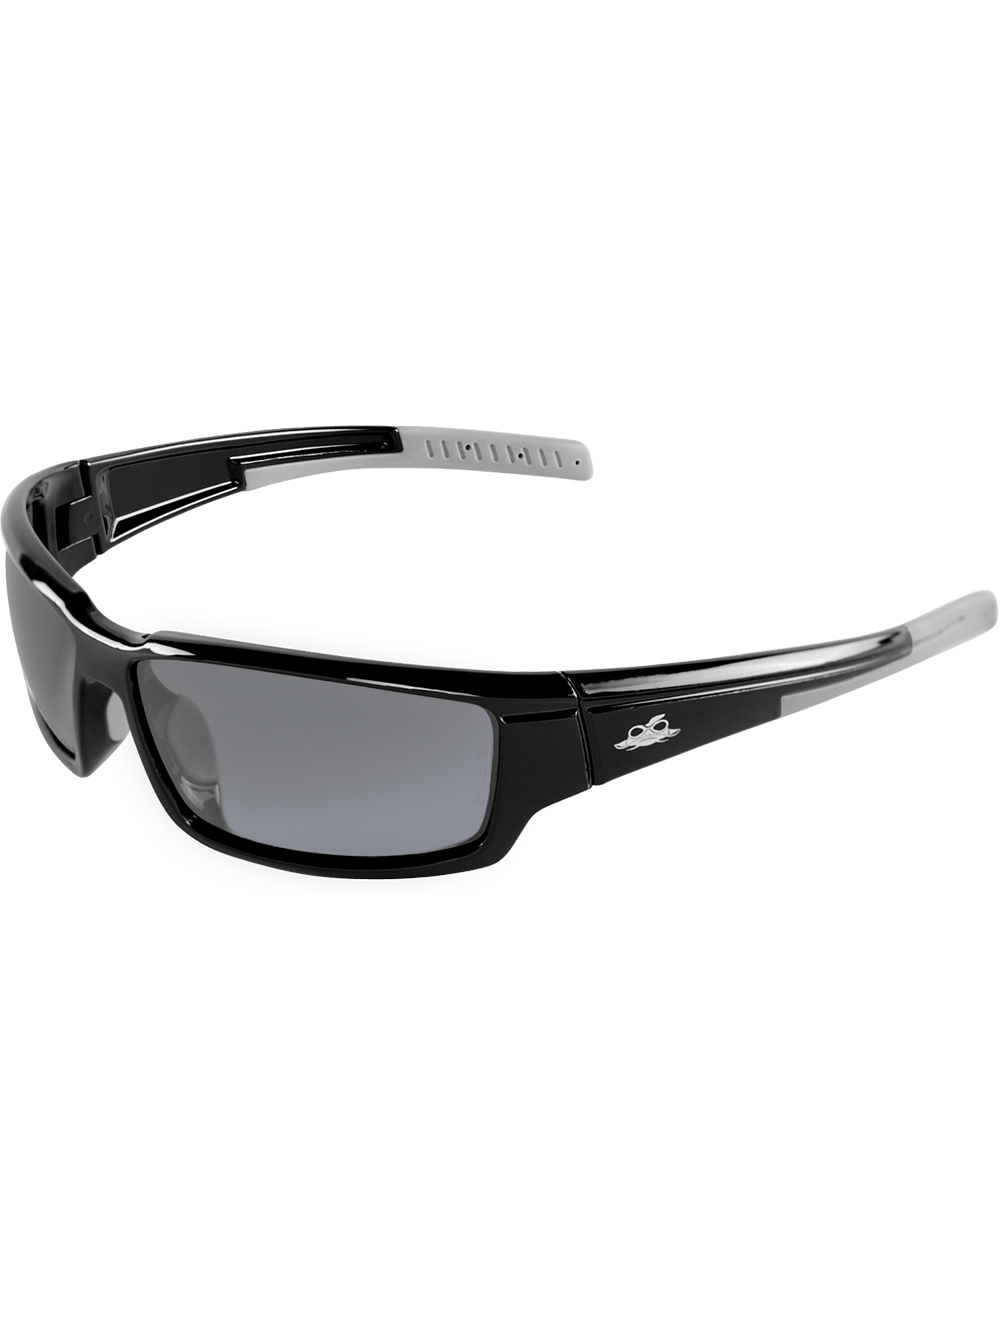 Maki® Silver Mirror Polarized Lens, Shiny Black Frame Safety Glasses - BH145712